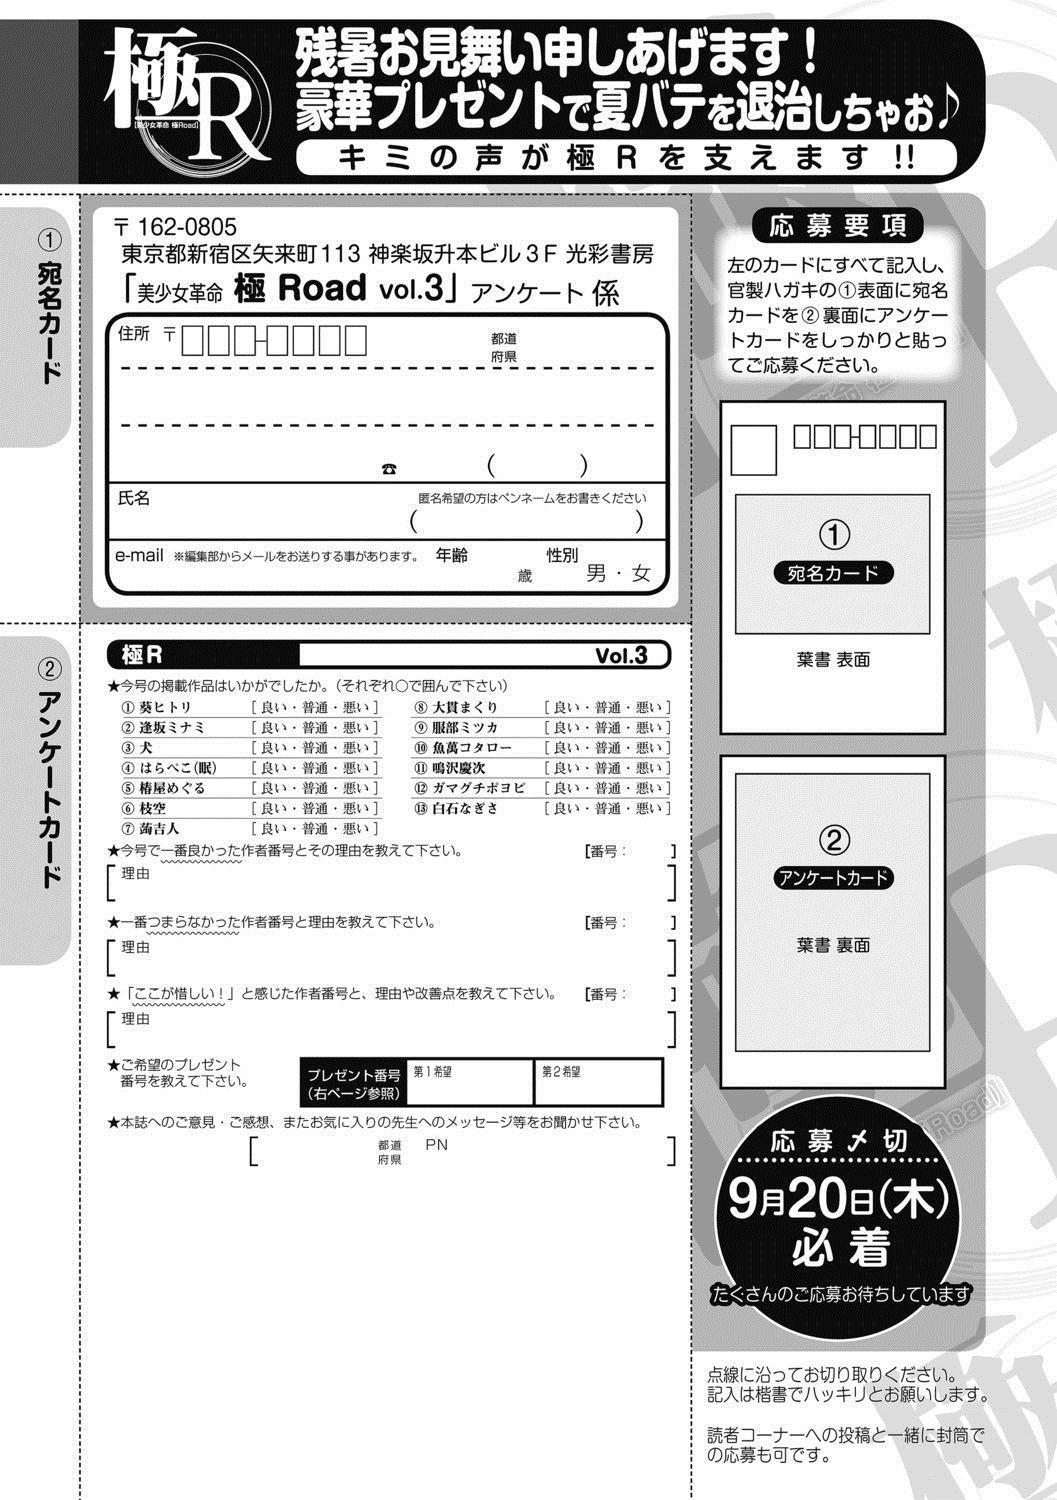 Bishoujo Kakumei KIWAME Road 2012-10 Vol.3 252